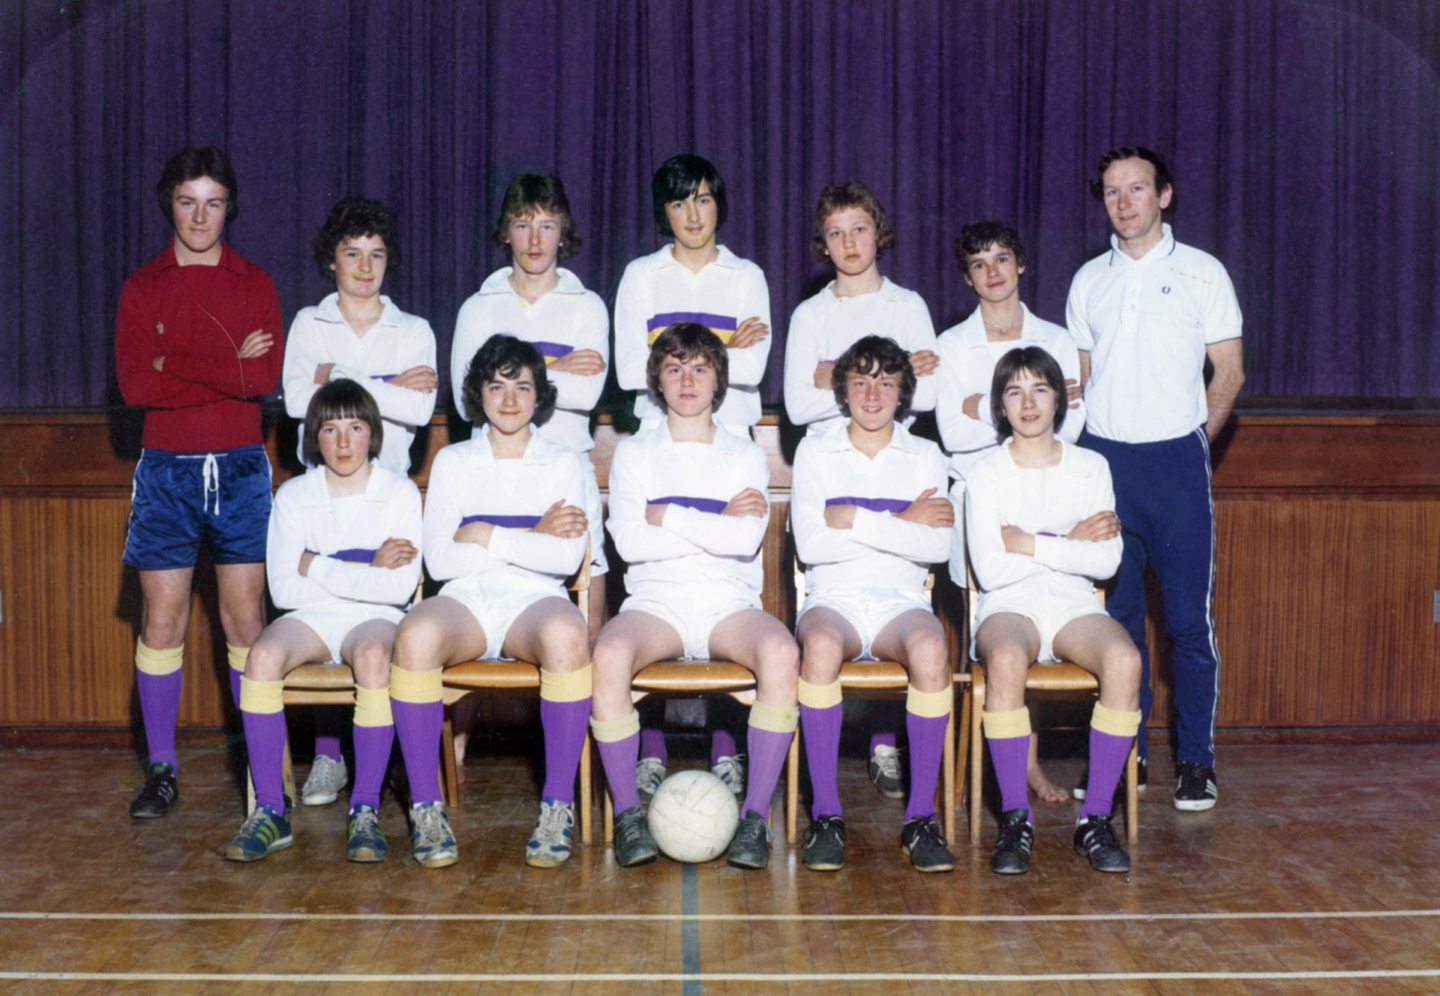 The Summerhill Academy Under - 15 football team in 1978.